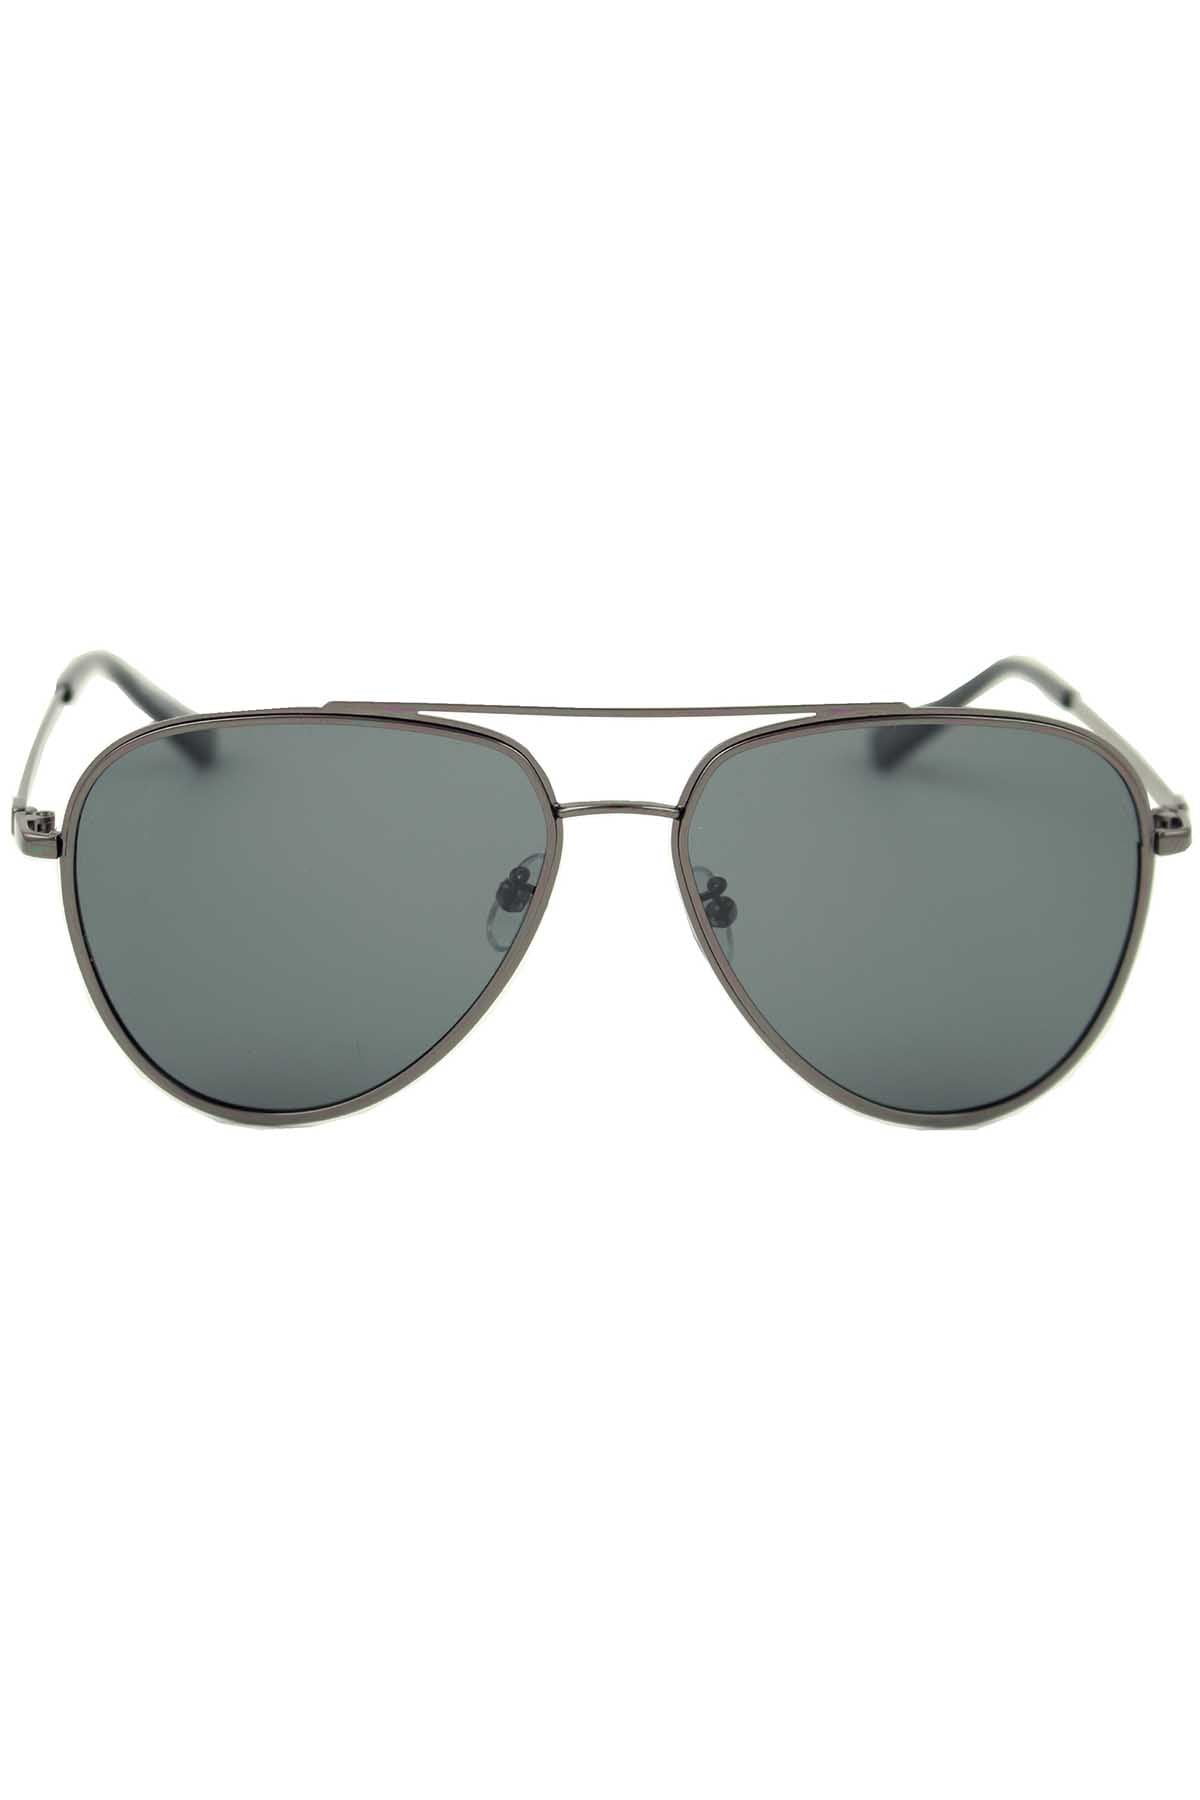 DIBI Black/Gunmetal Cape-Town Sunglasses